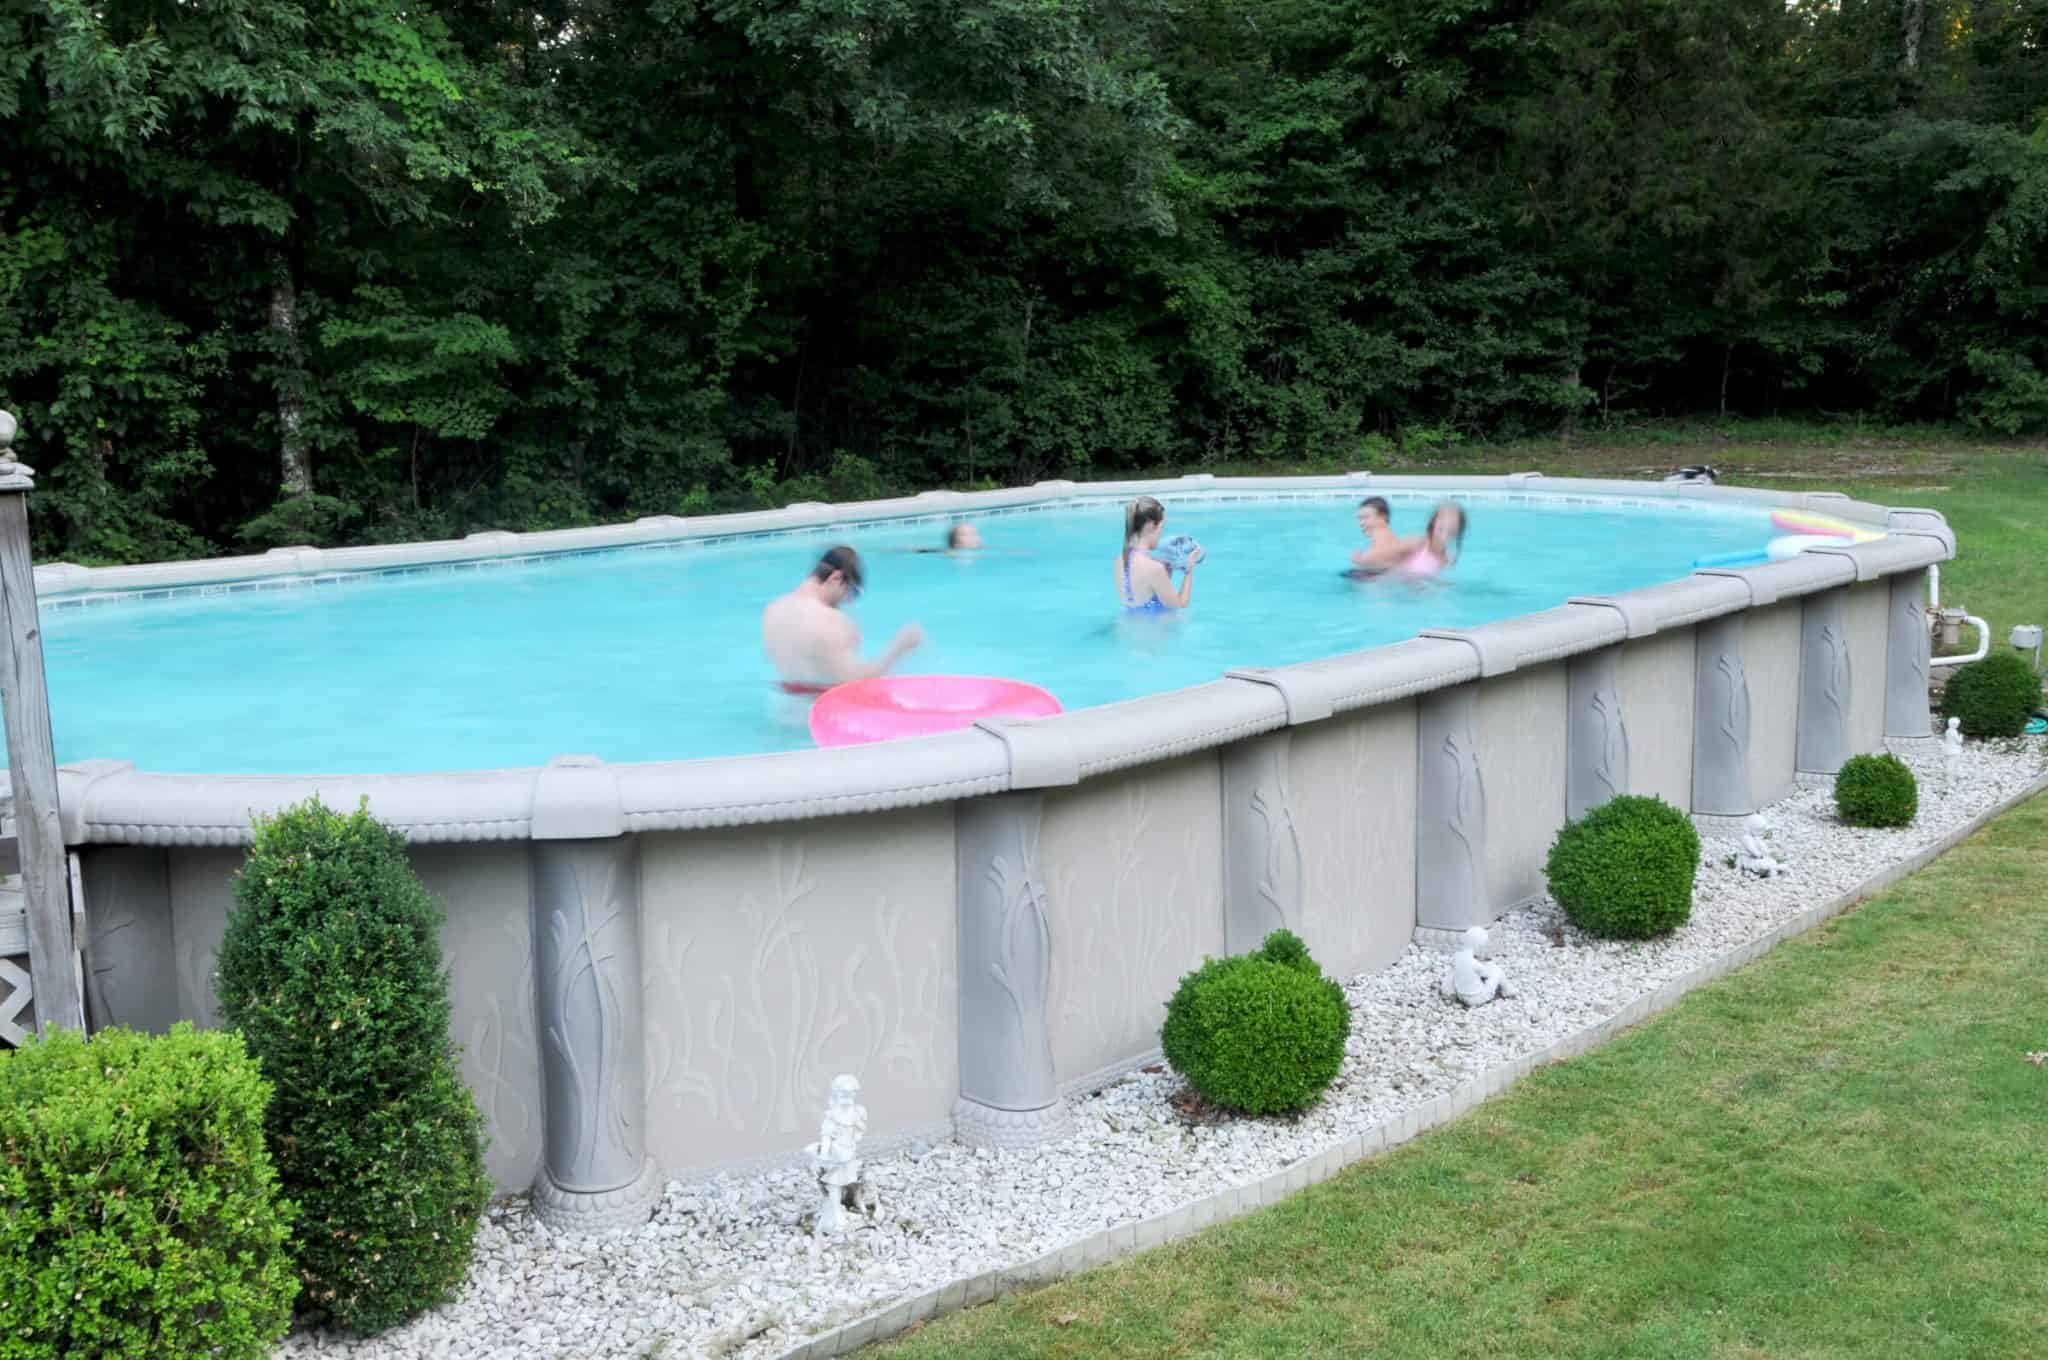 oval swimming pool